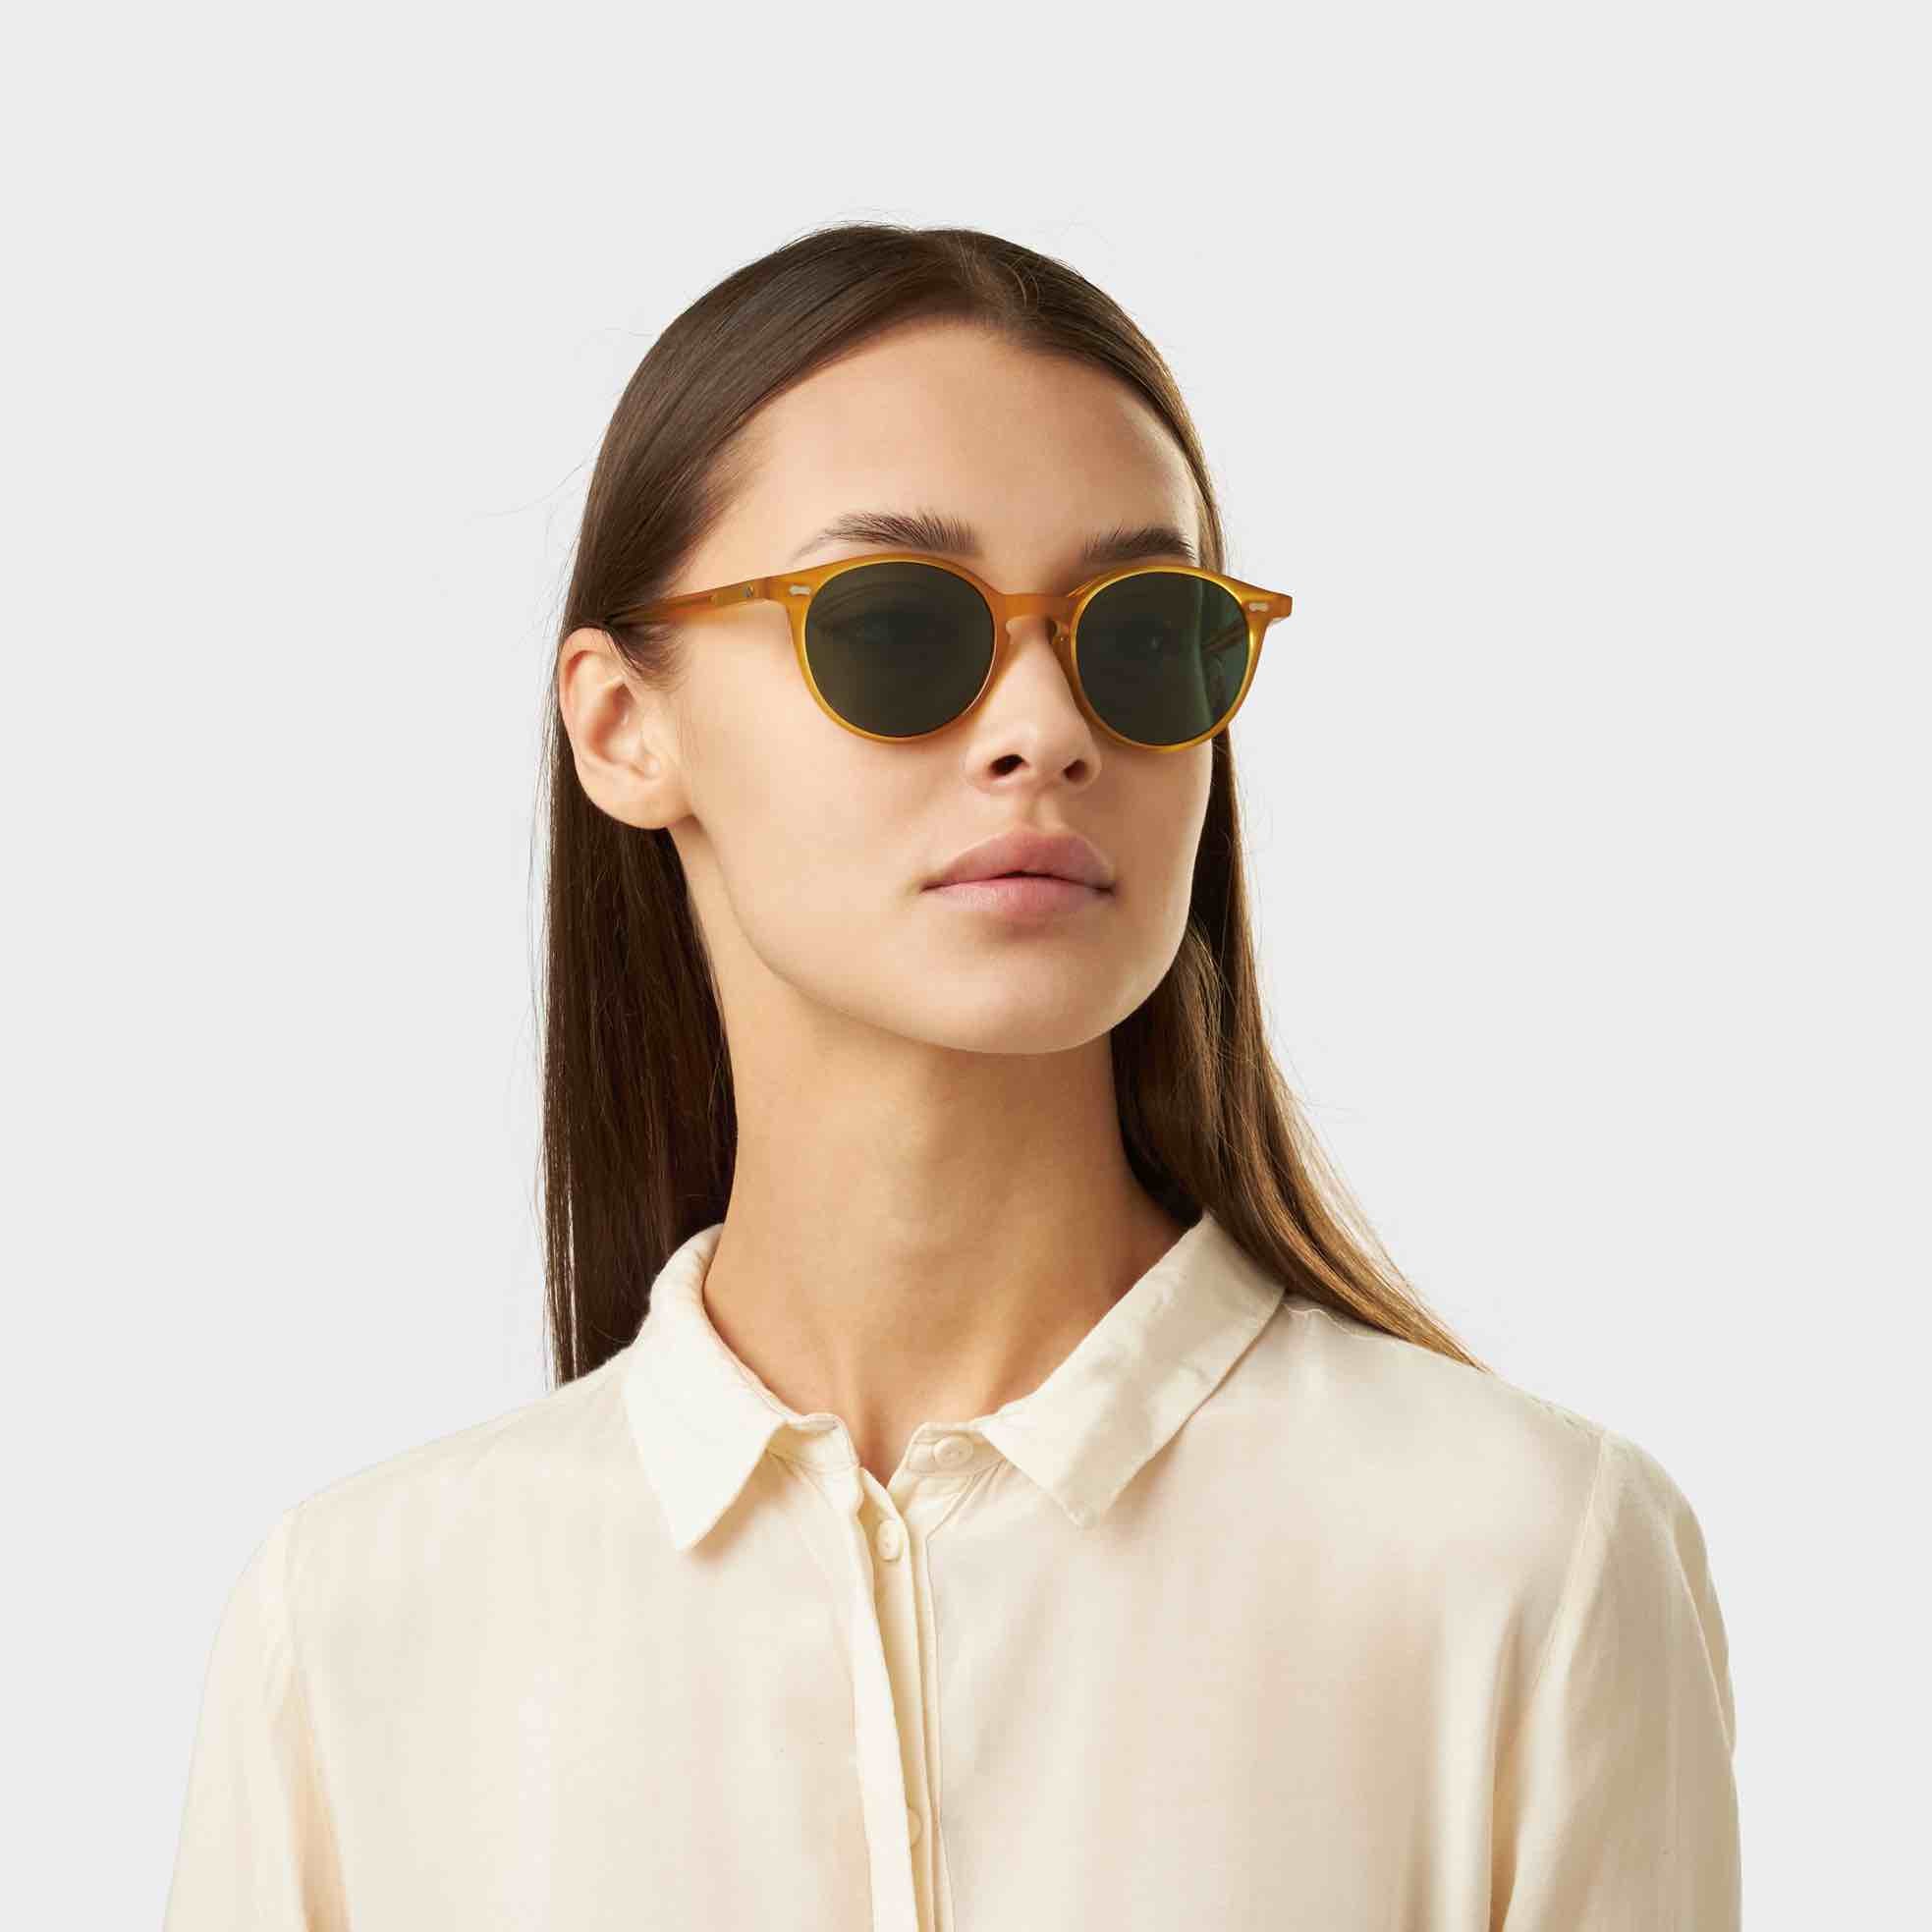 sunglasses-cran-eco-honey-bottle-green-sustainable-tbd-eyewear-woman